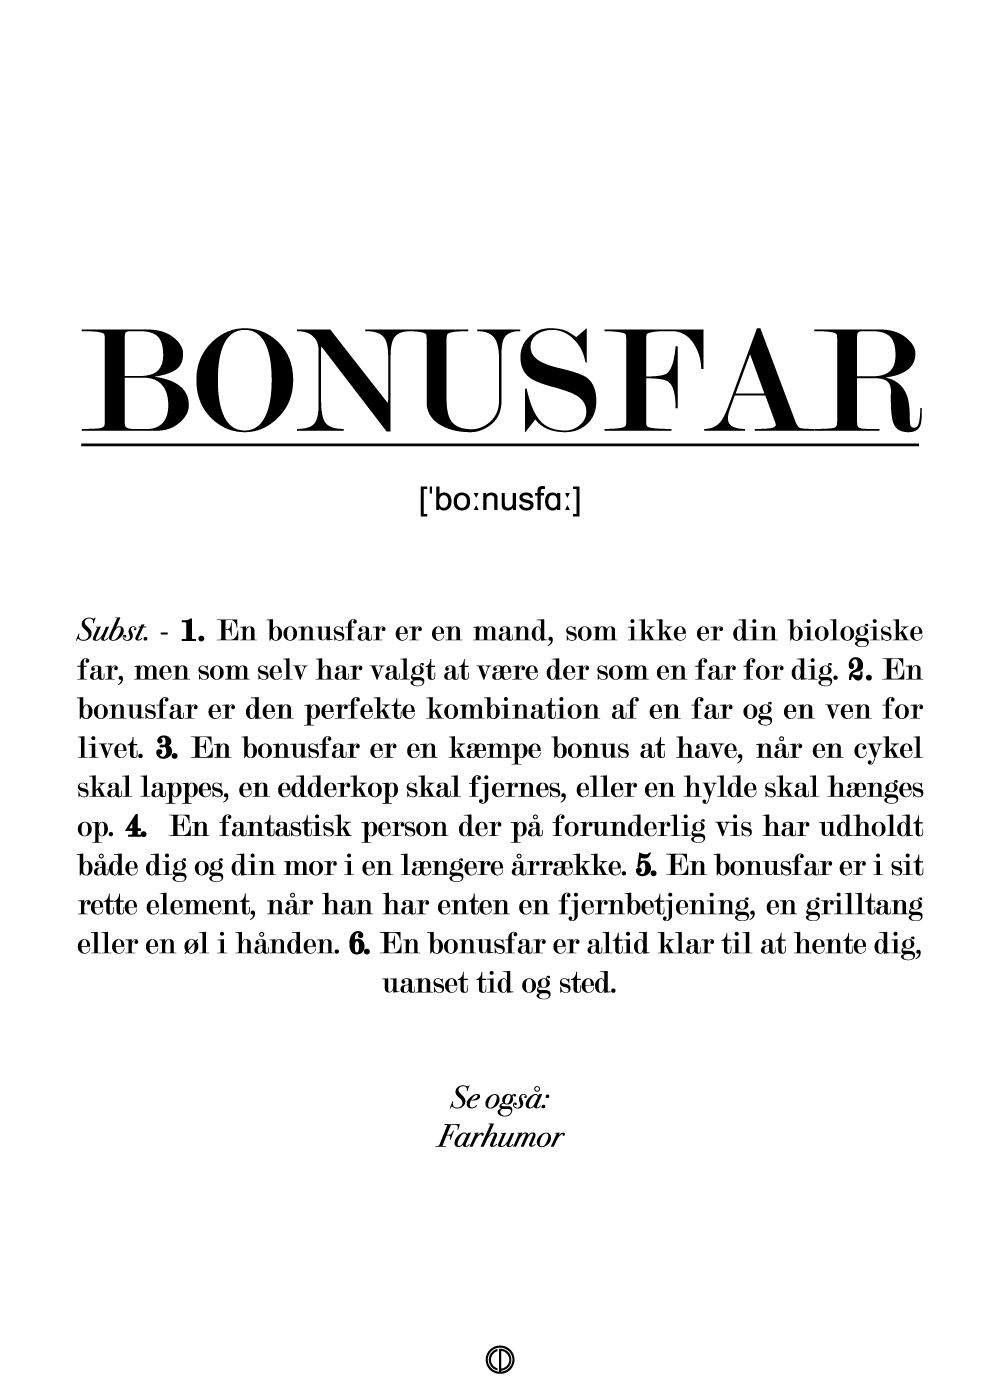 Rouse Mart Lam Bonusfar plakat | Plakat med definition af bonusfar | Gaven til far